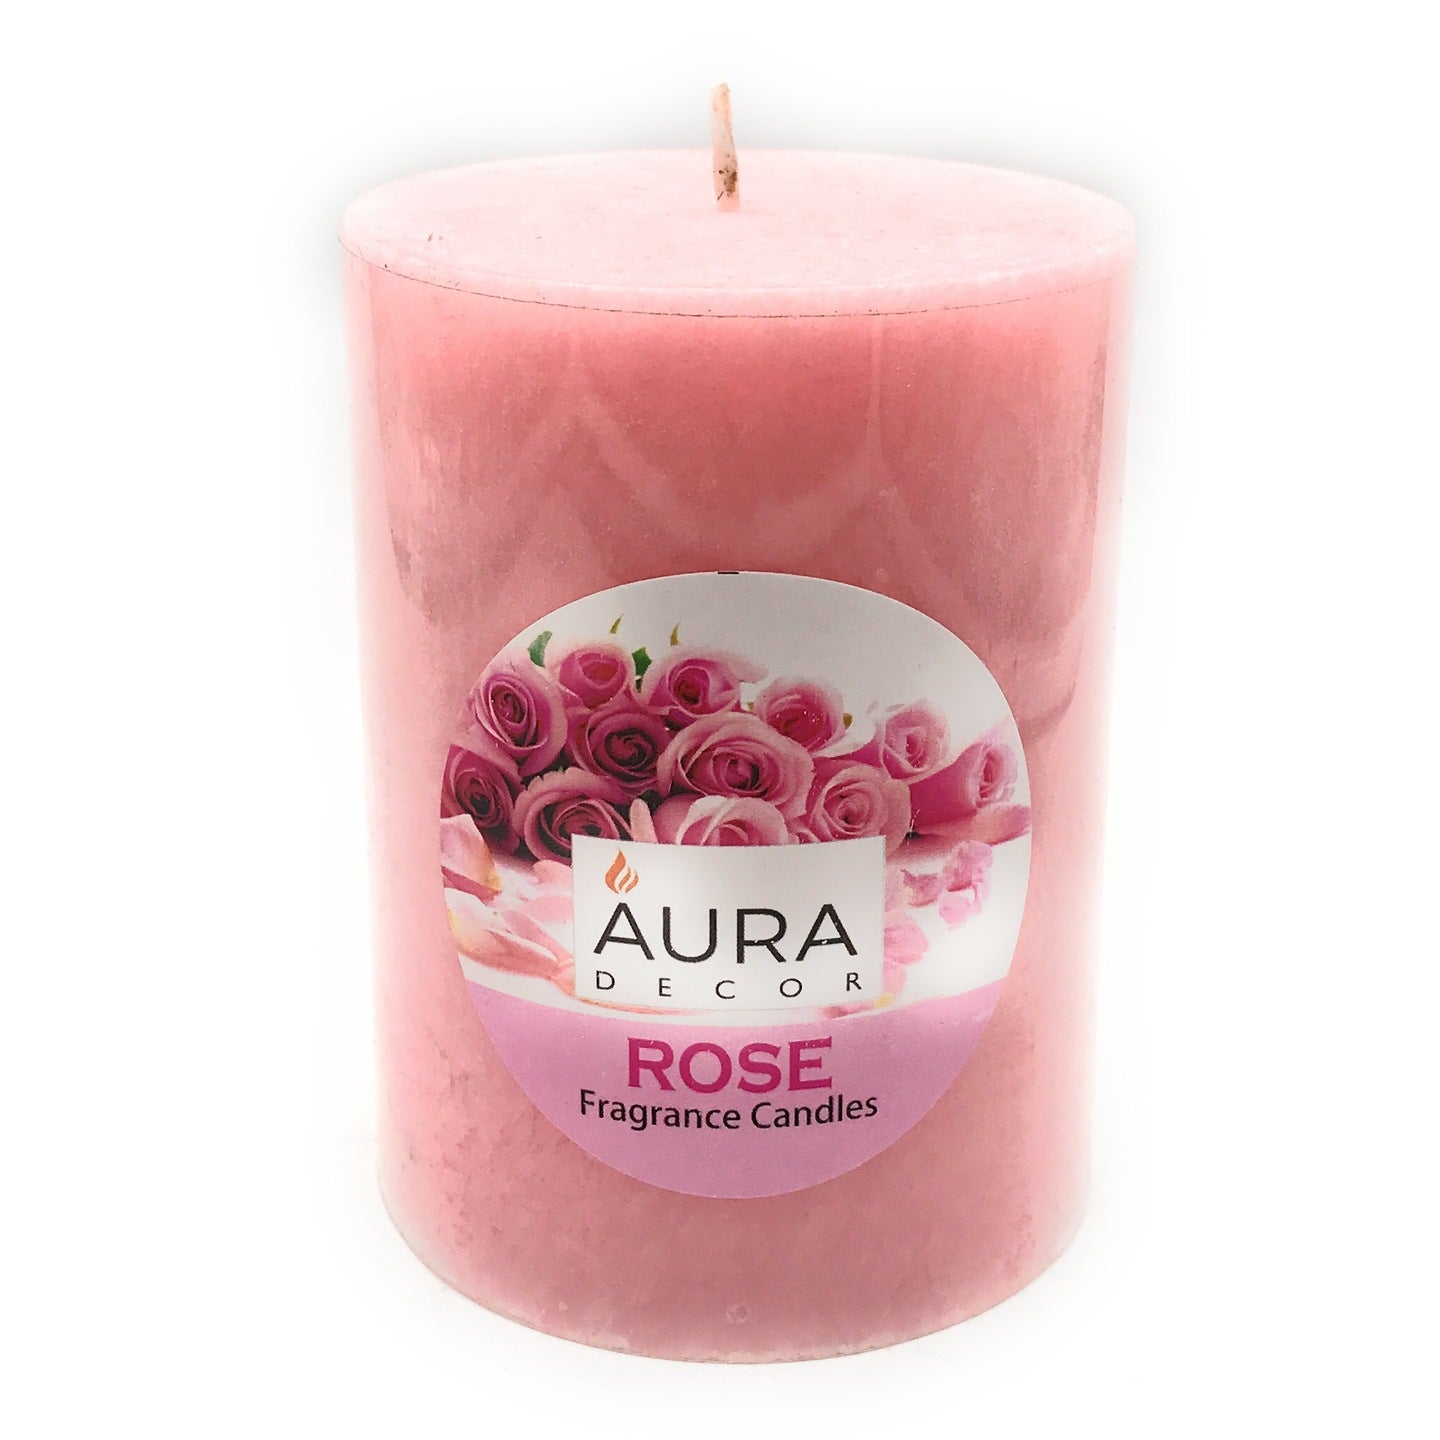 AuraDecor Rose Fragrance Pillar Candle - auradecor.co.in